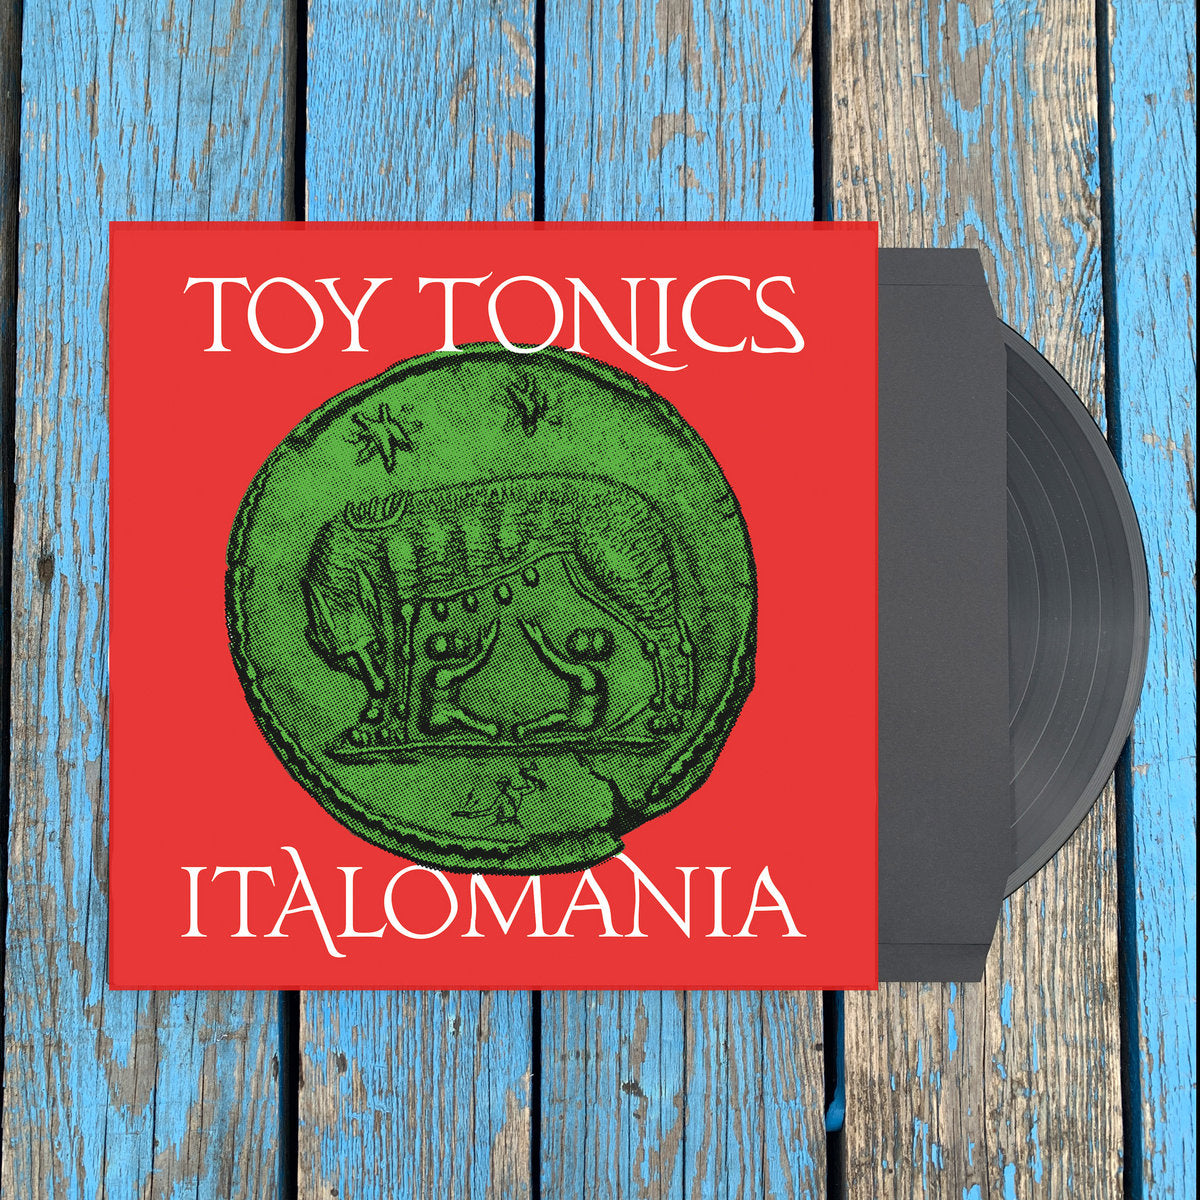 Various Artists - Italomania (2x12") [Toy Tonics]